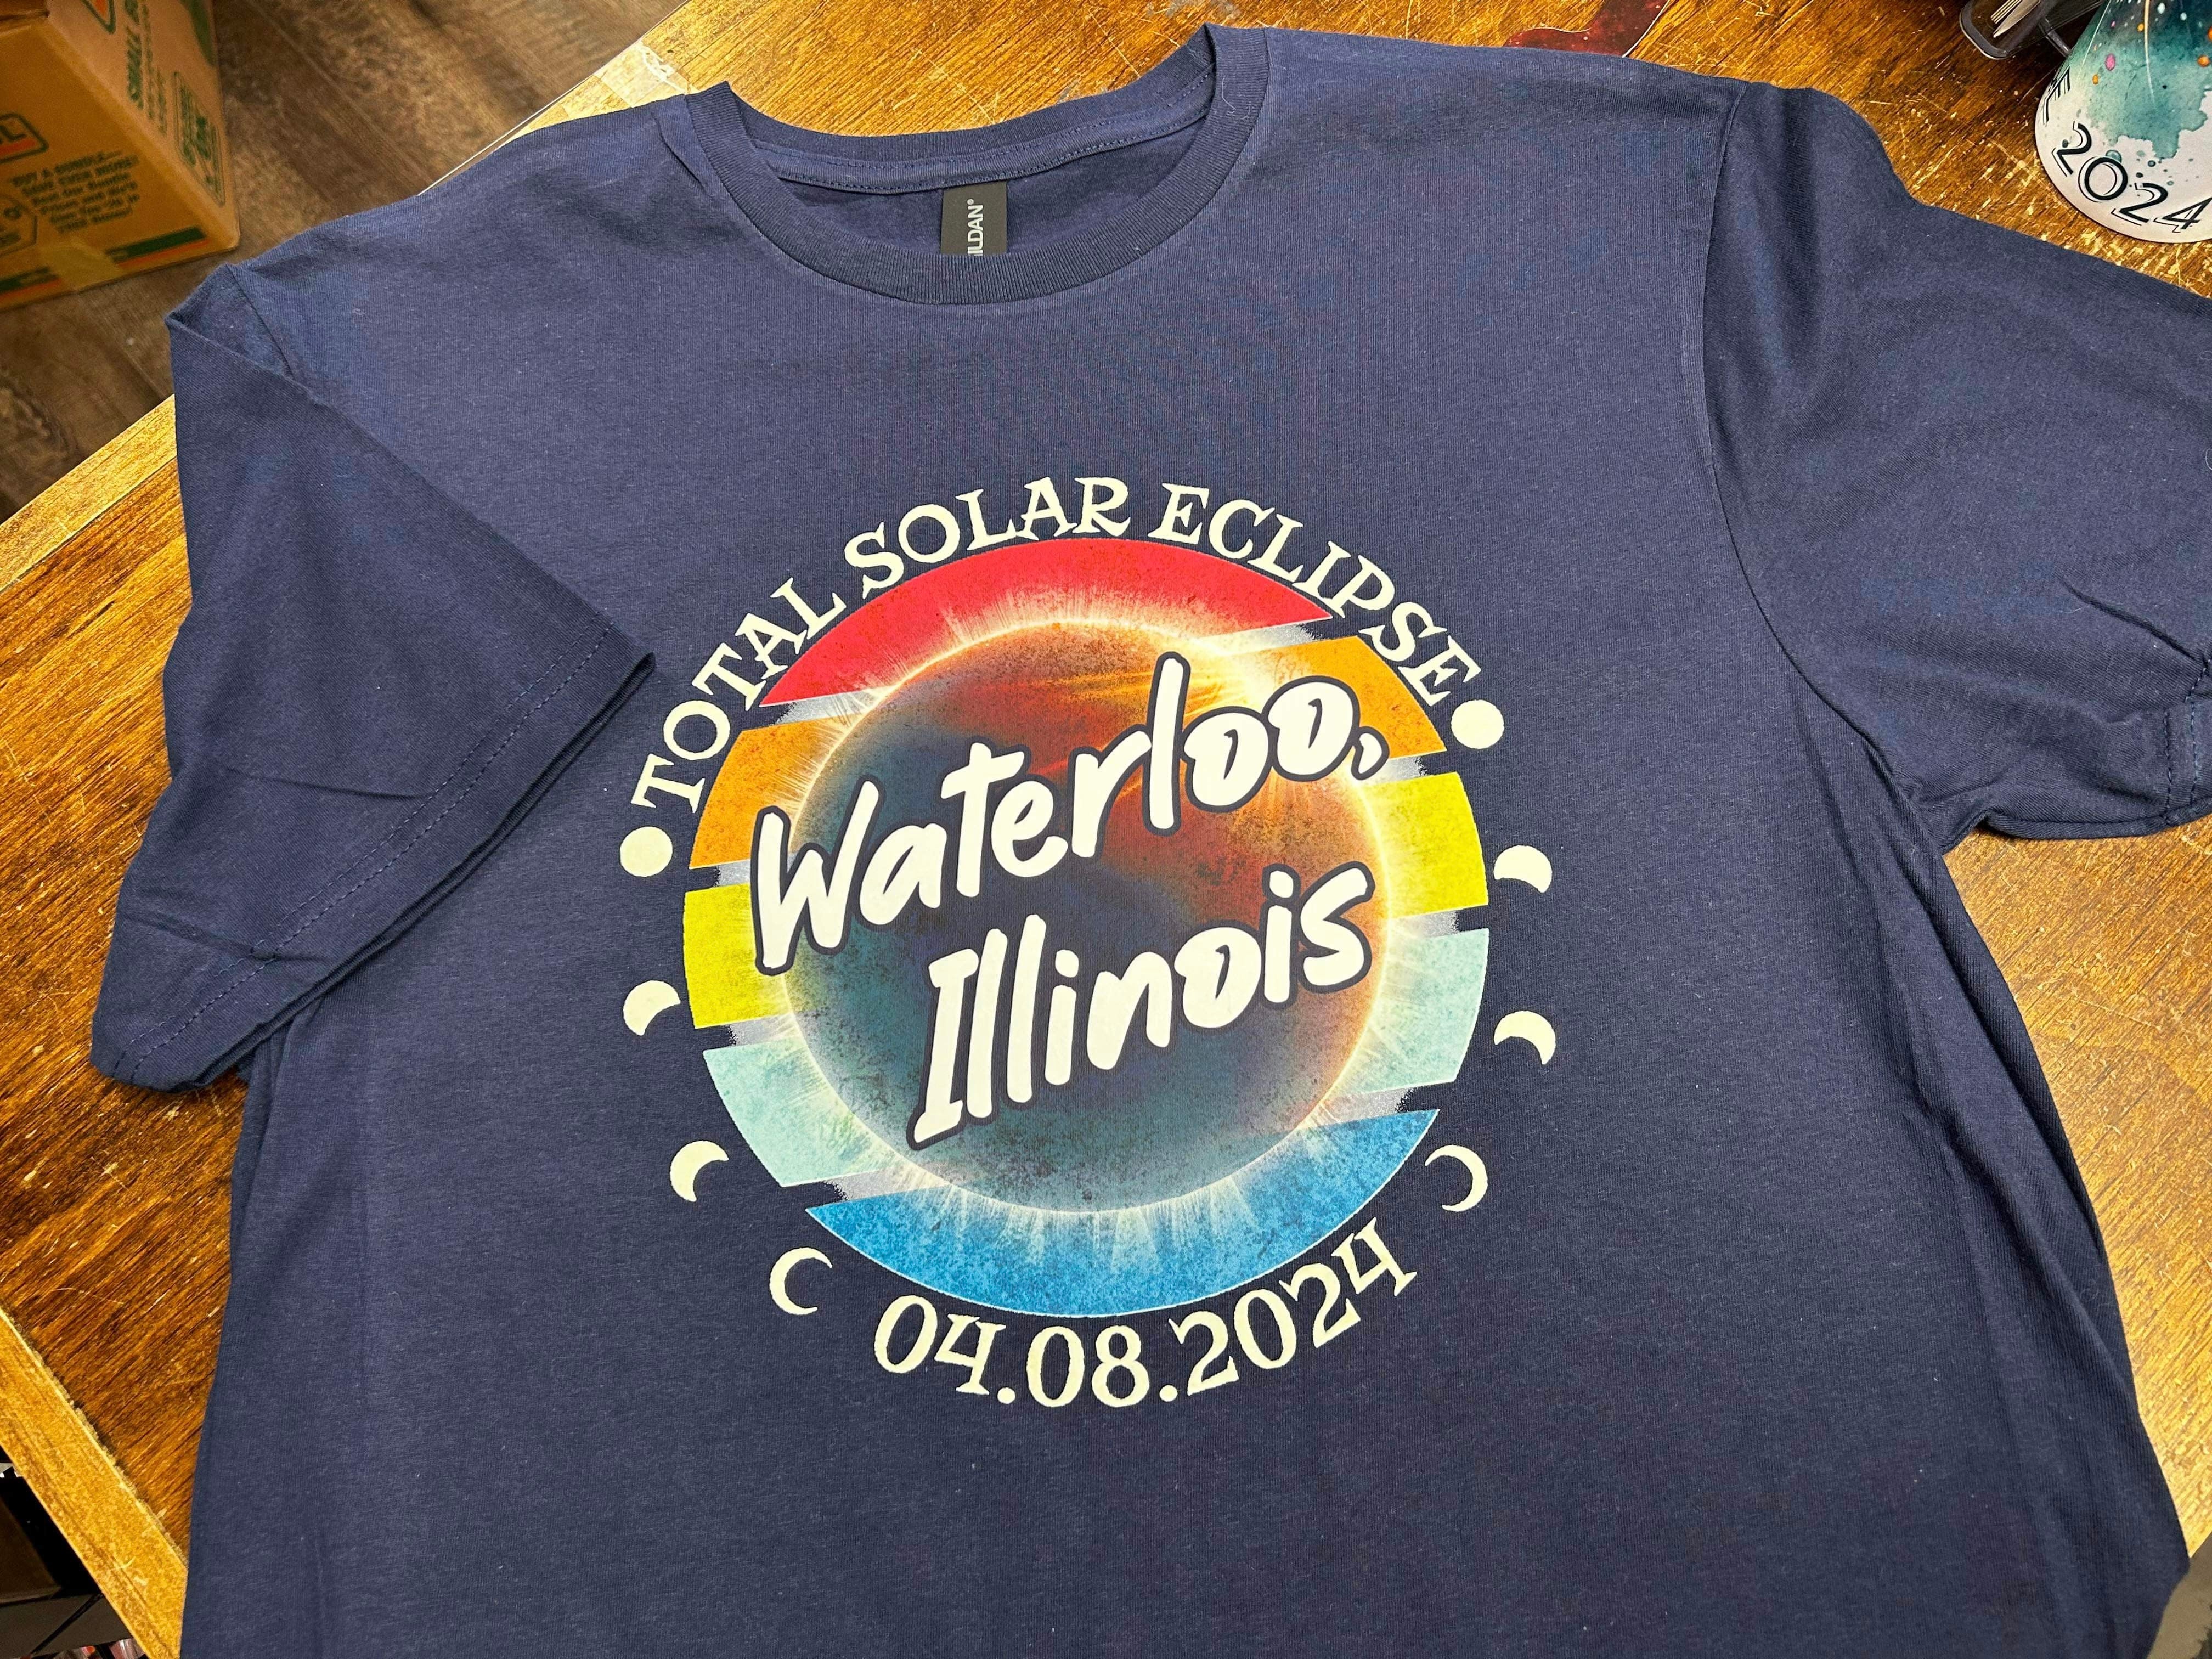 Total Solar Eclipse T-shirt - Waterloo, IL